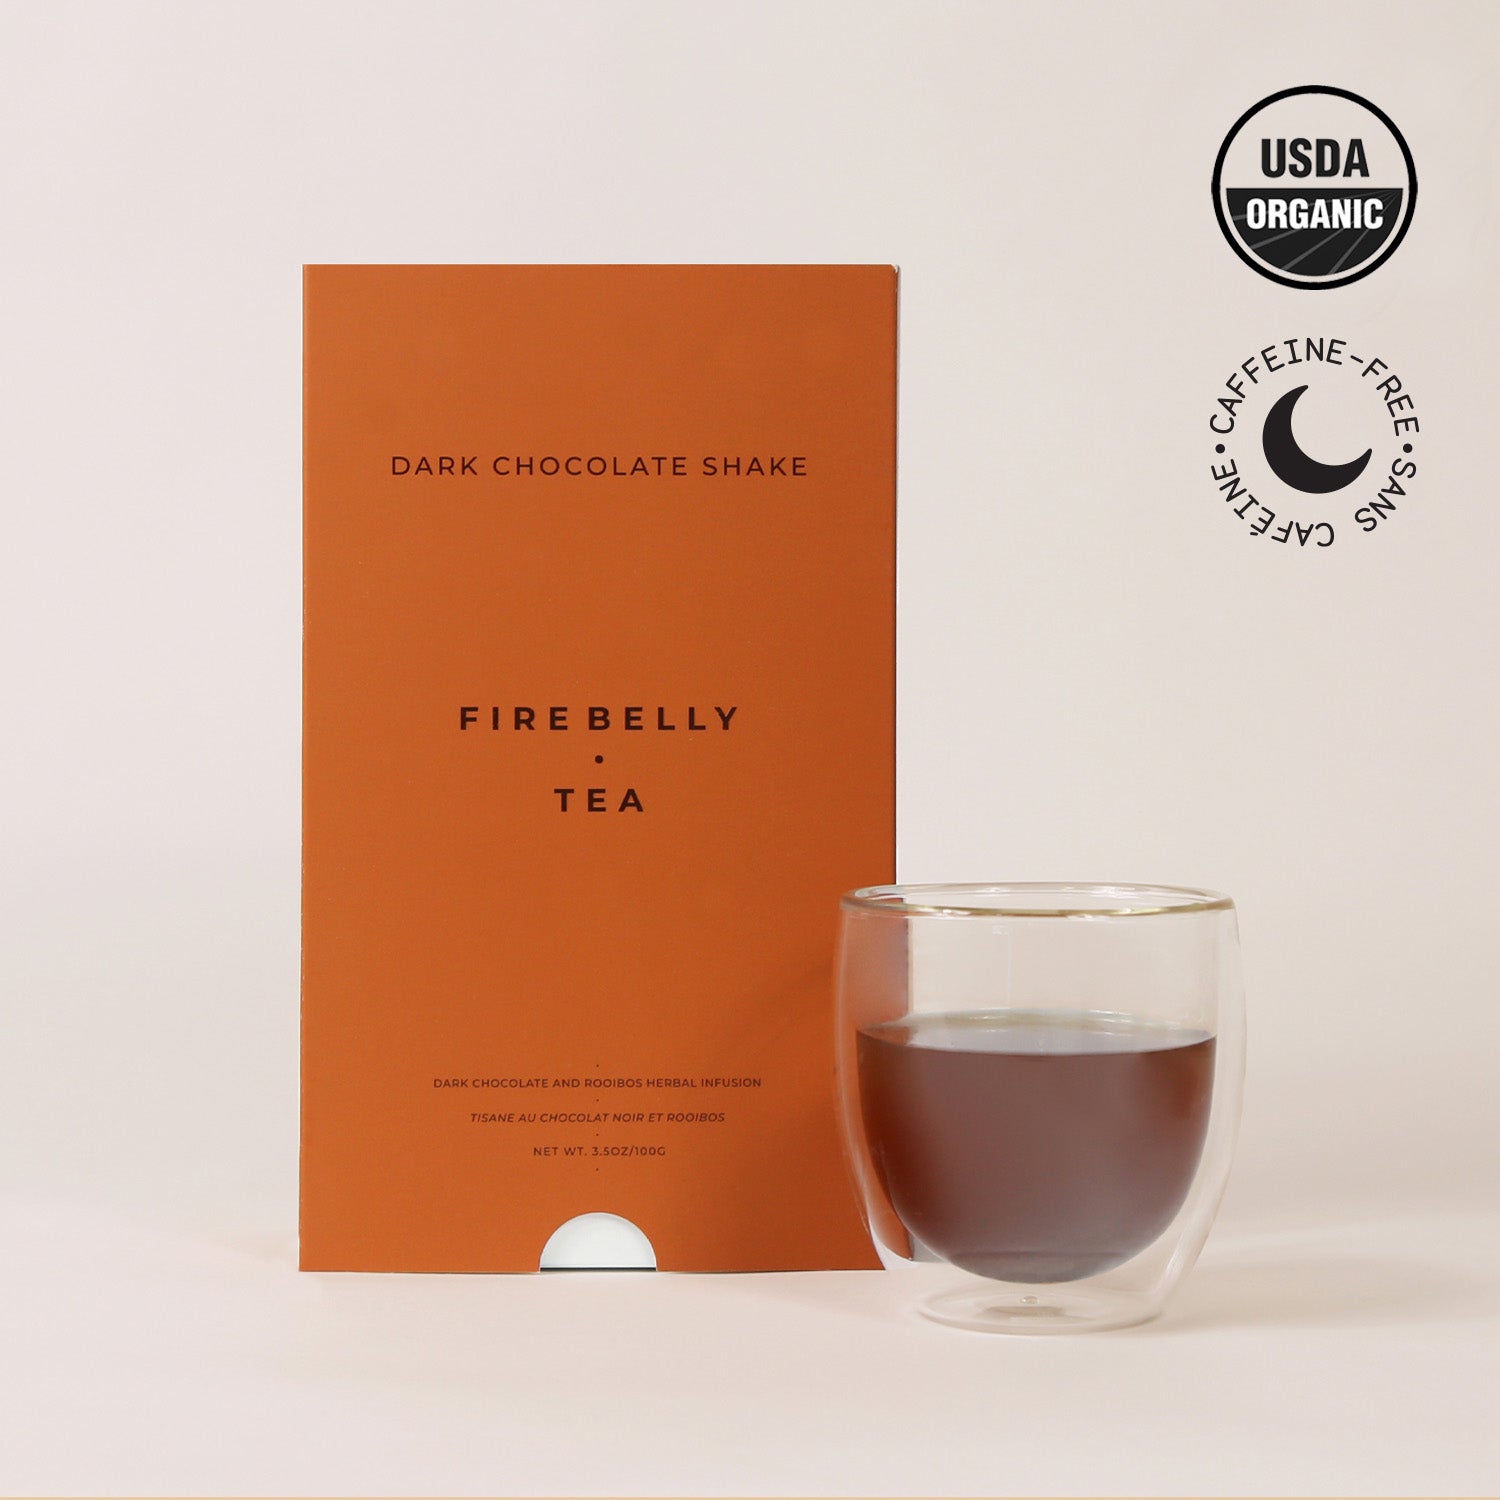 Dark Chocolate Shake - Firebelly Tea